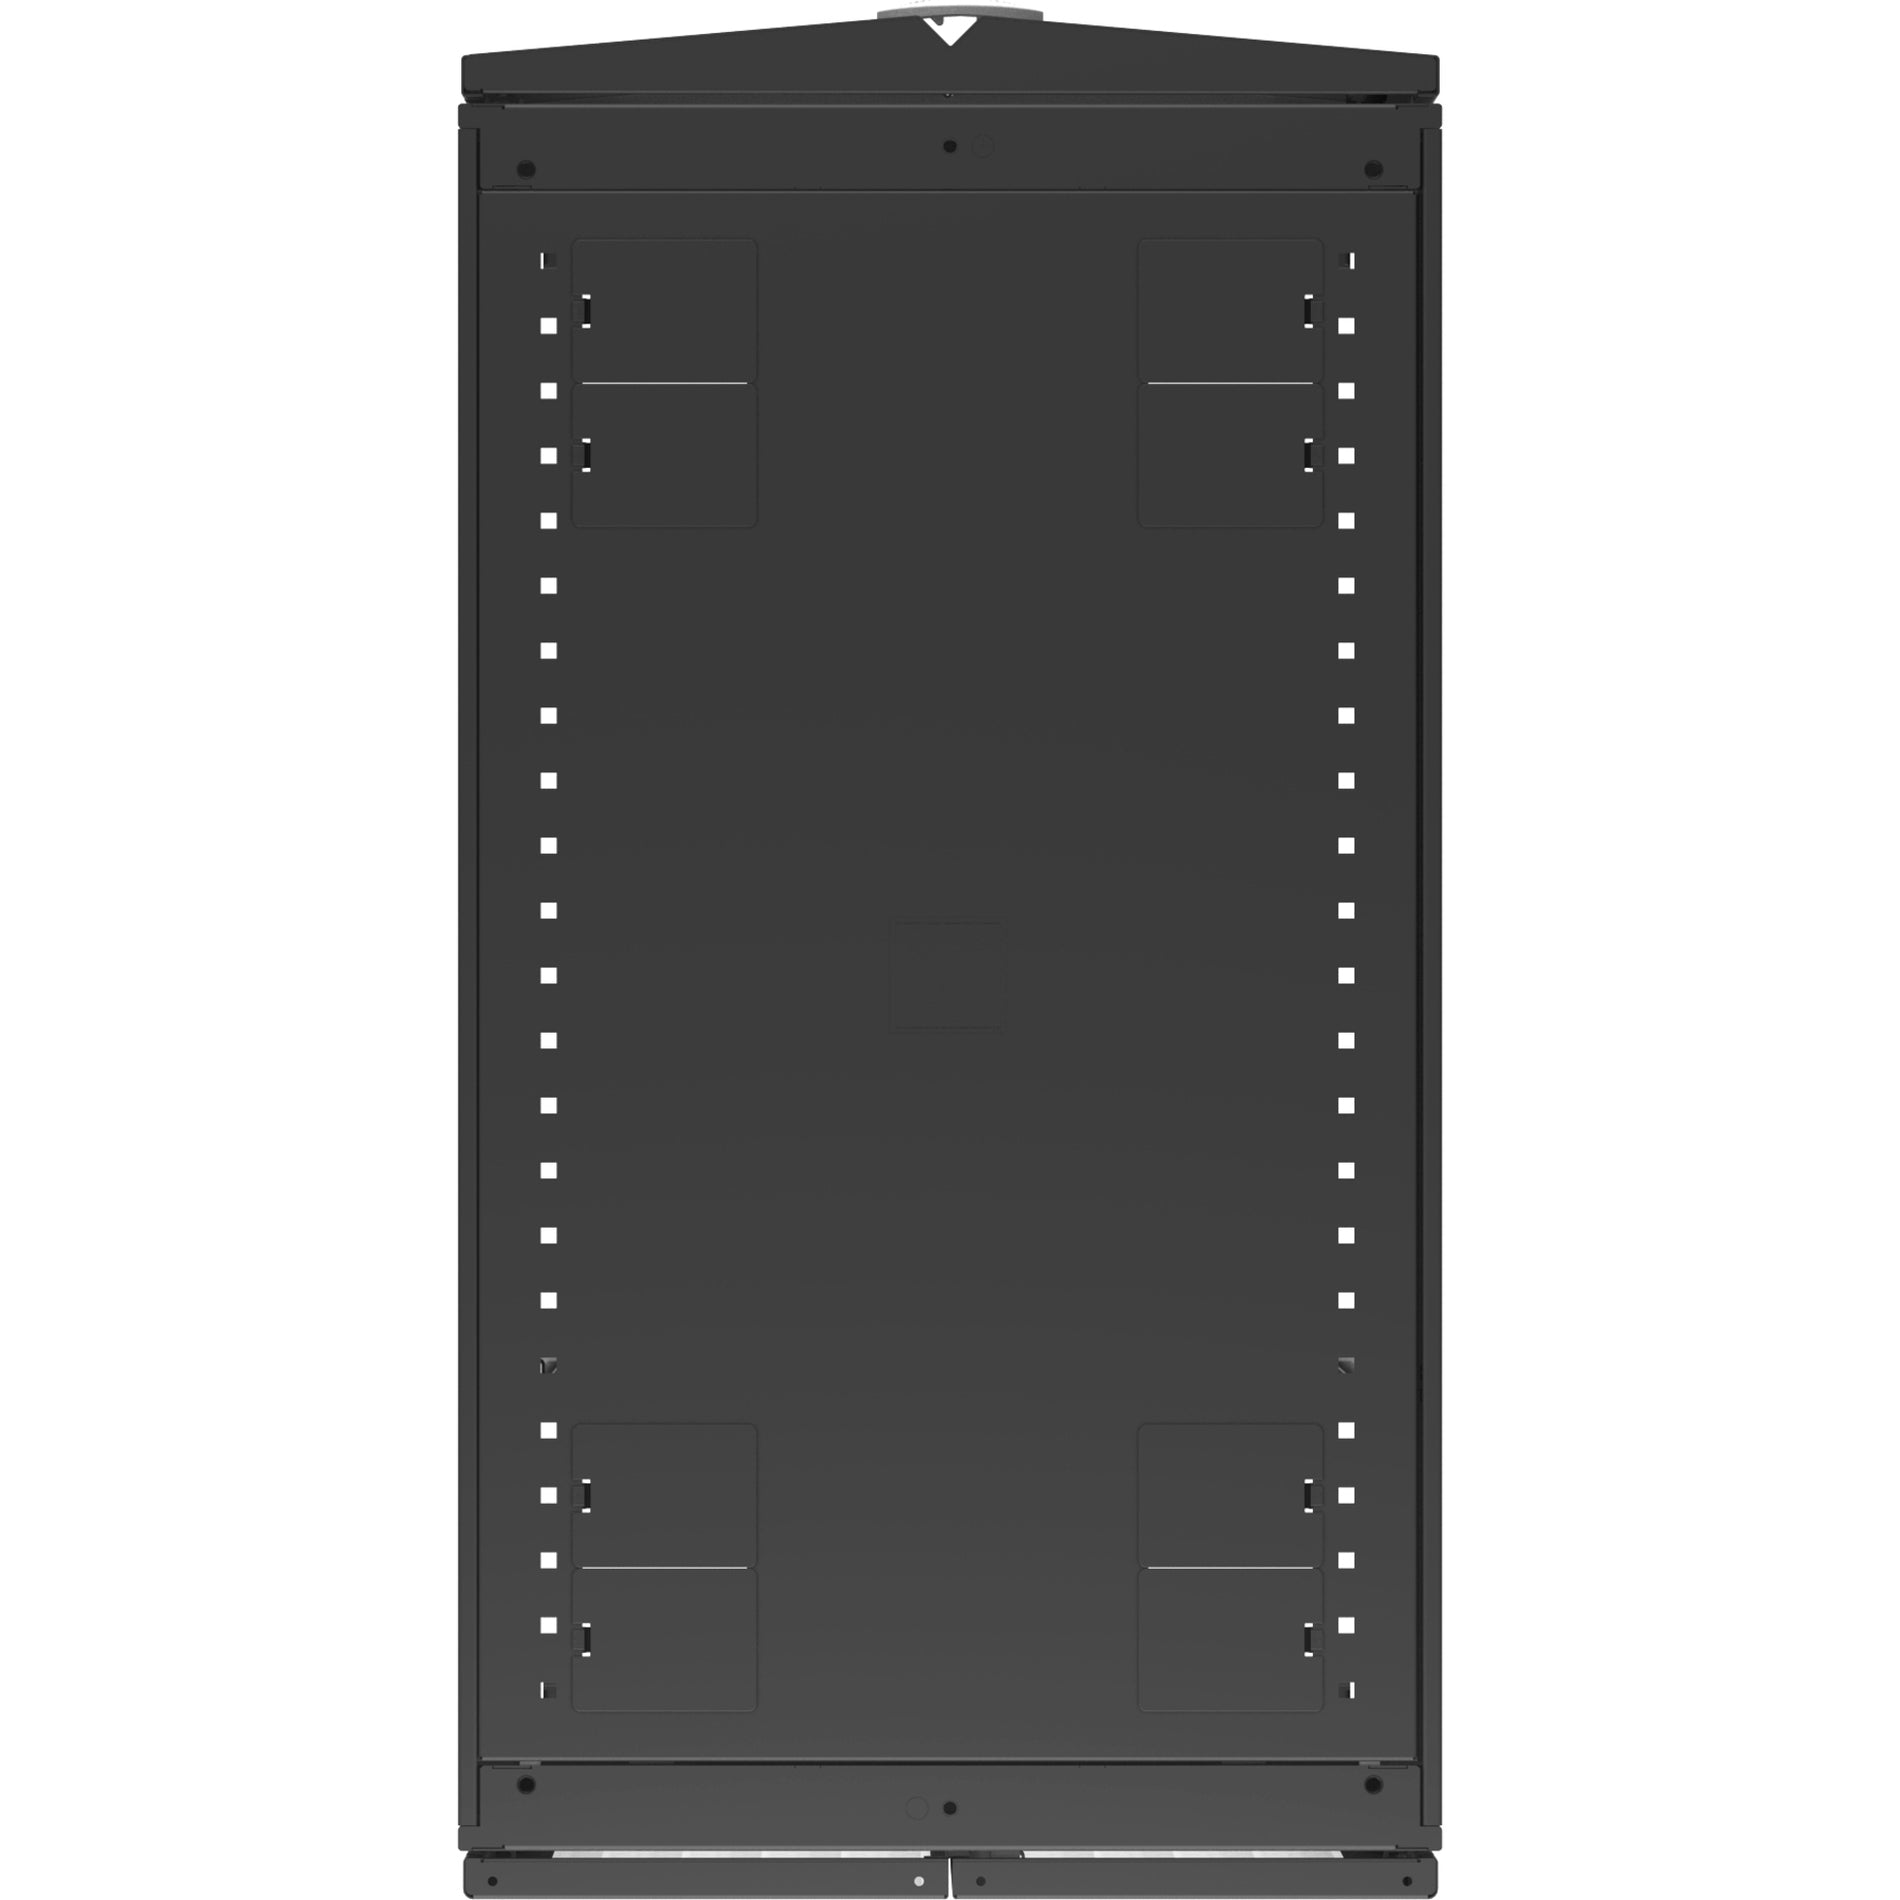 VERTIV VR3100TAA VR - 42U TAA Compliant Rack Cabinet, Patch Panel, Server, LAN Switch, Black